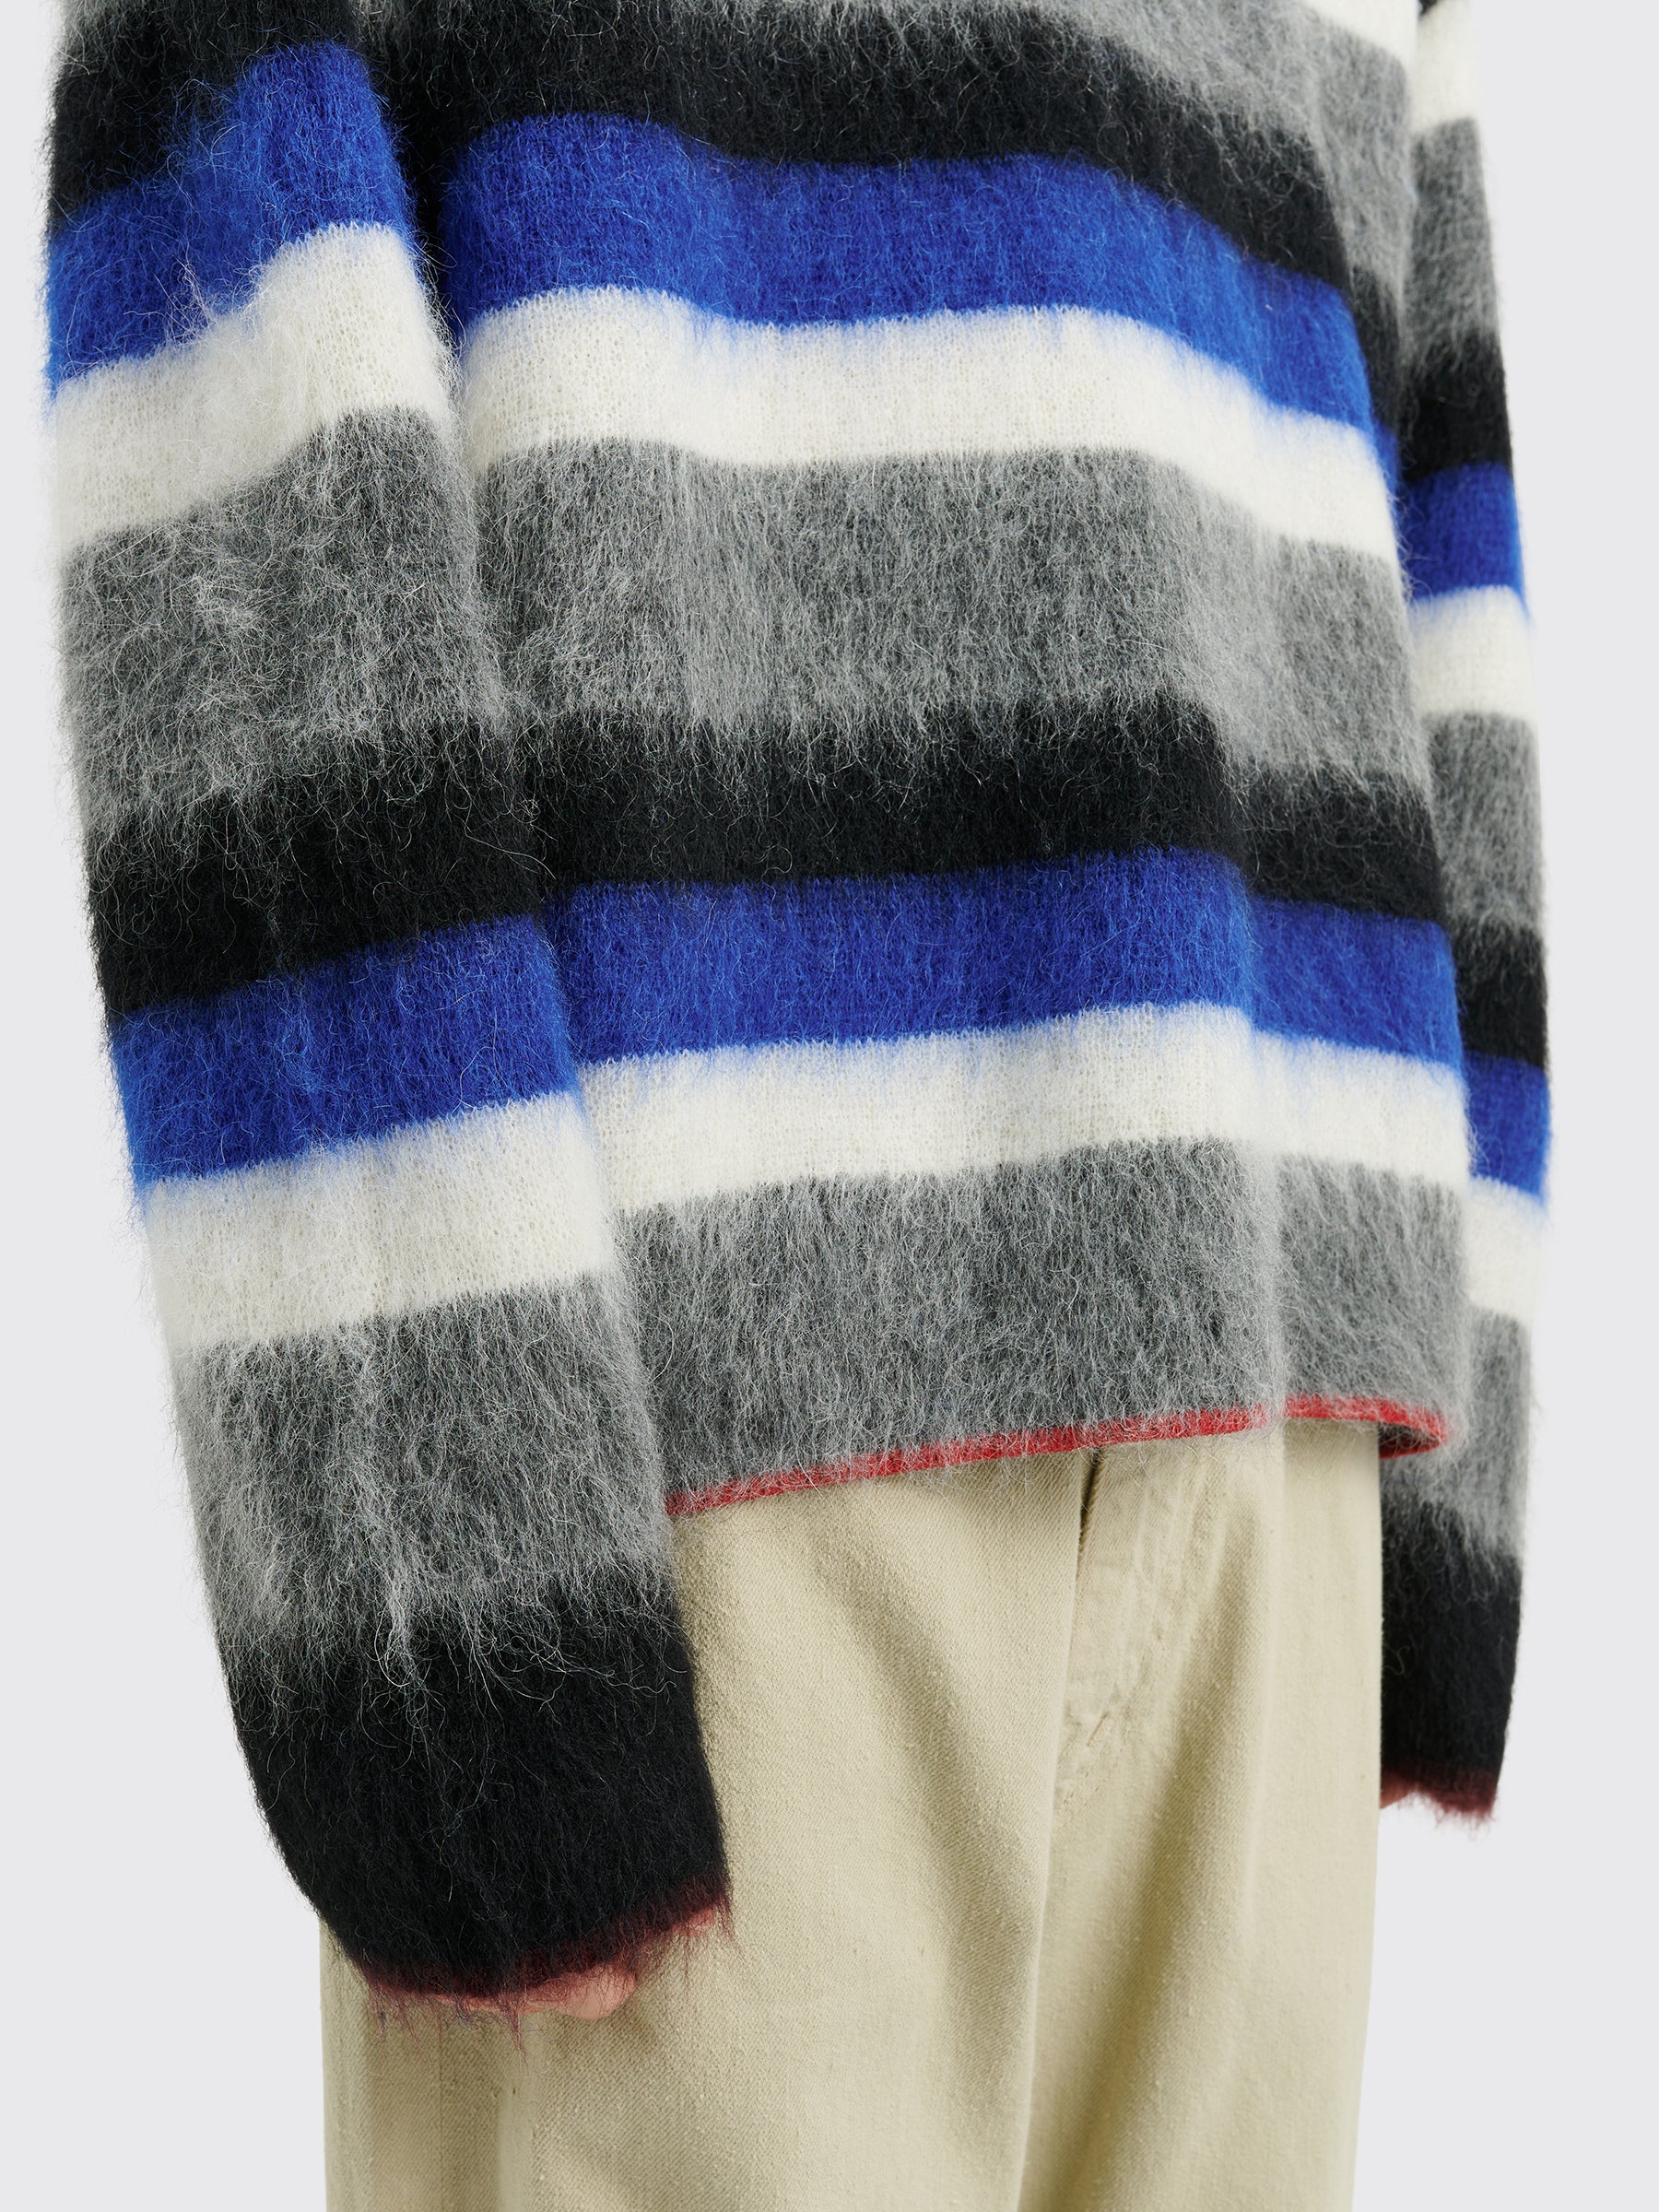 Zankov Tomas Stripe Brushed Mohair Sweater Charcoal Melange